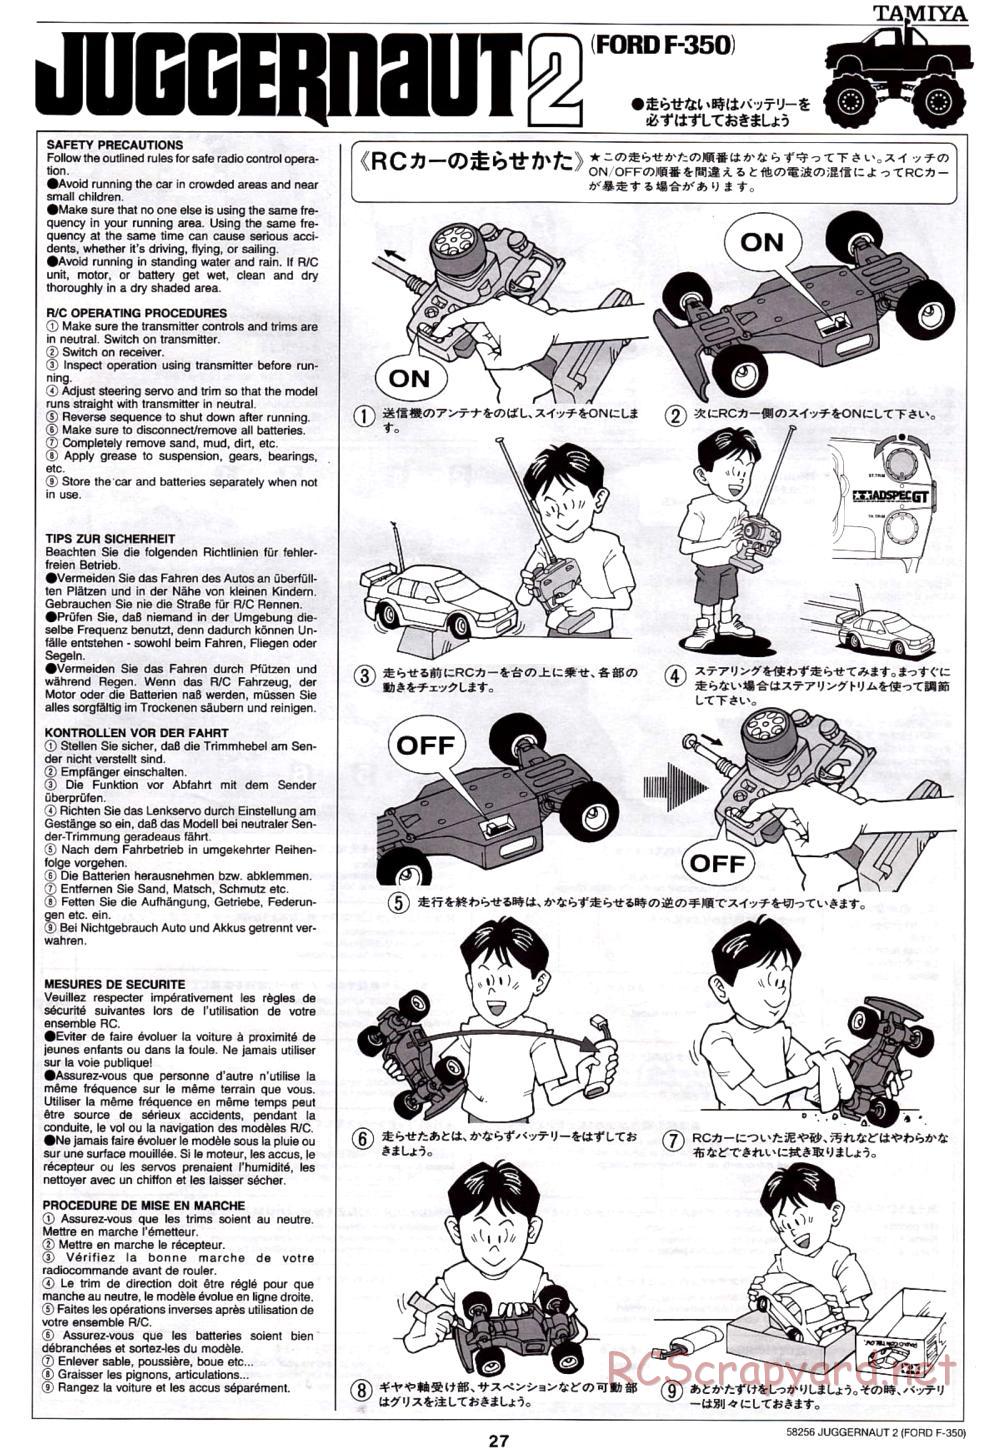 Tamiya - Juggernaut 2 Chassis - Manual - Page 27